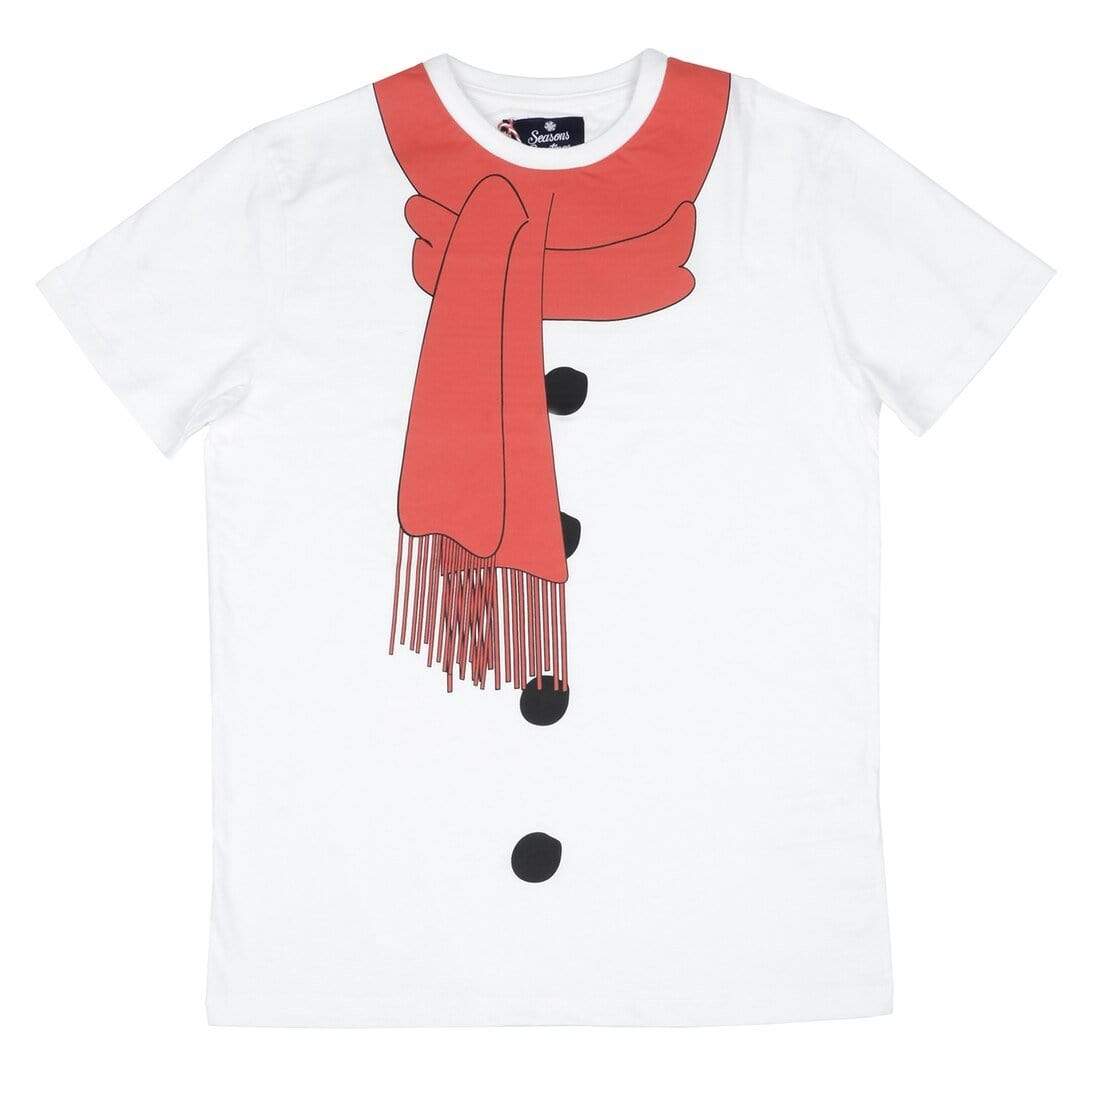 Mr Crimbo Mens Crew White Snowman Scarf Christmas T-Shirt - MrCrimbo.co.uk -VISMW06038WHT_A - S -christmas outfit